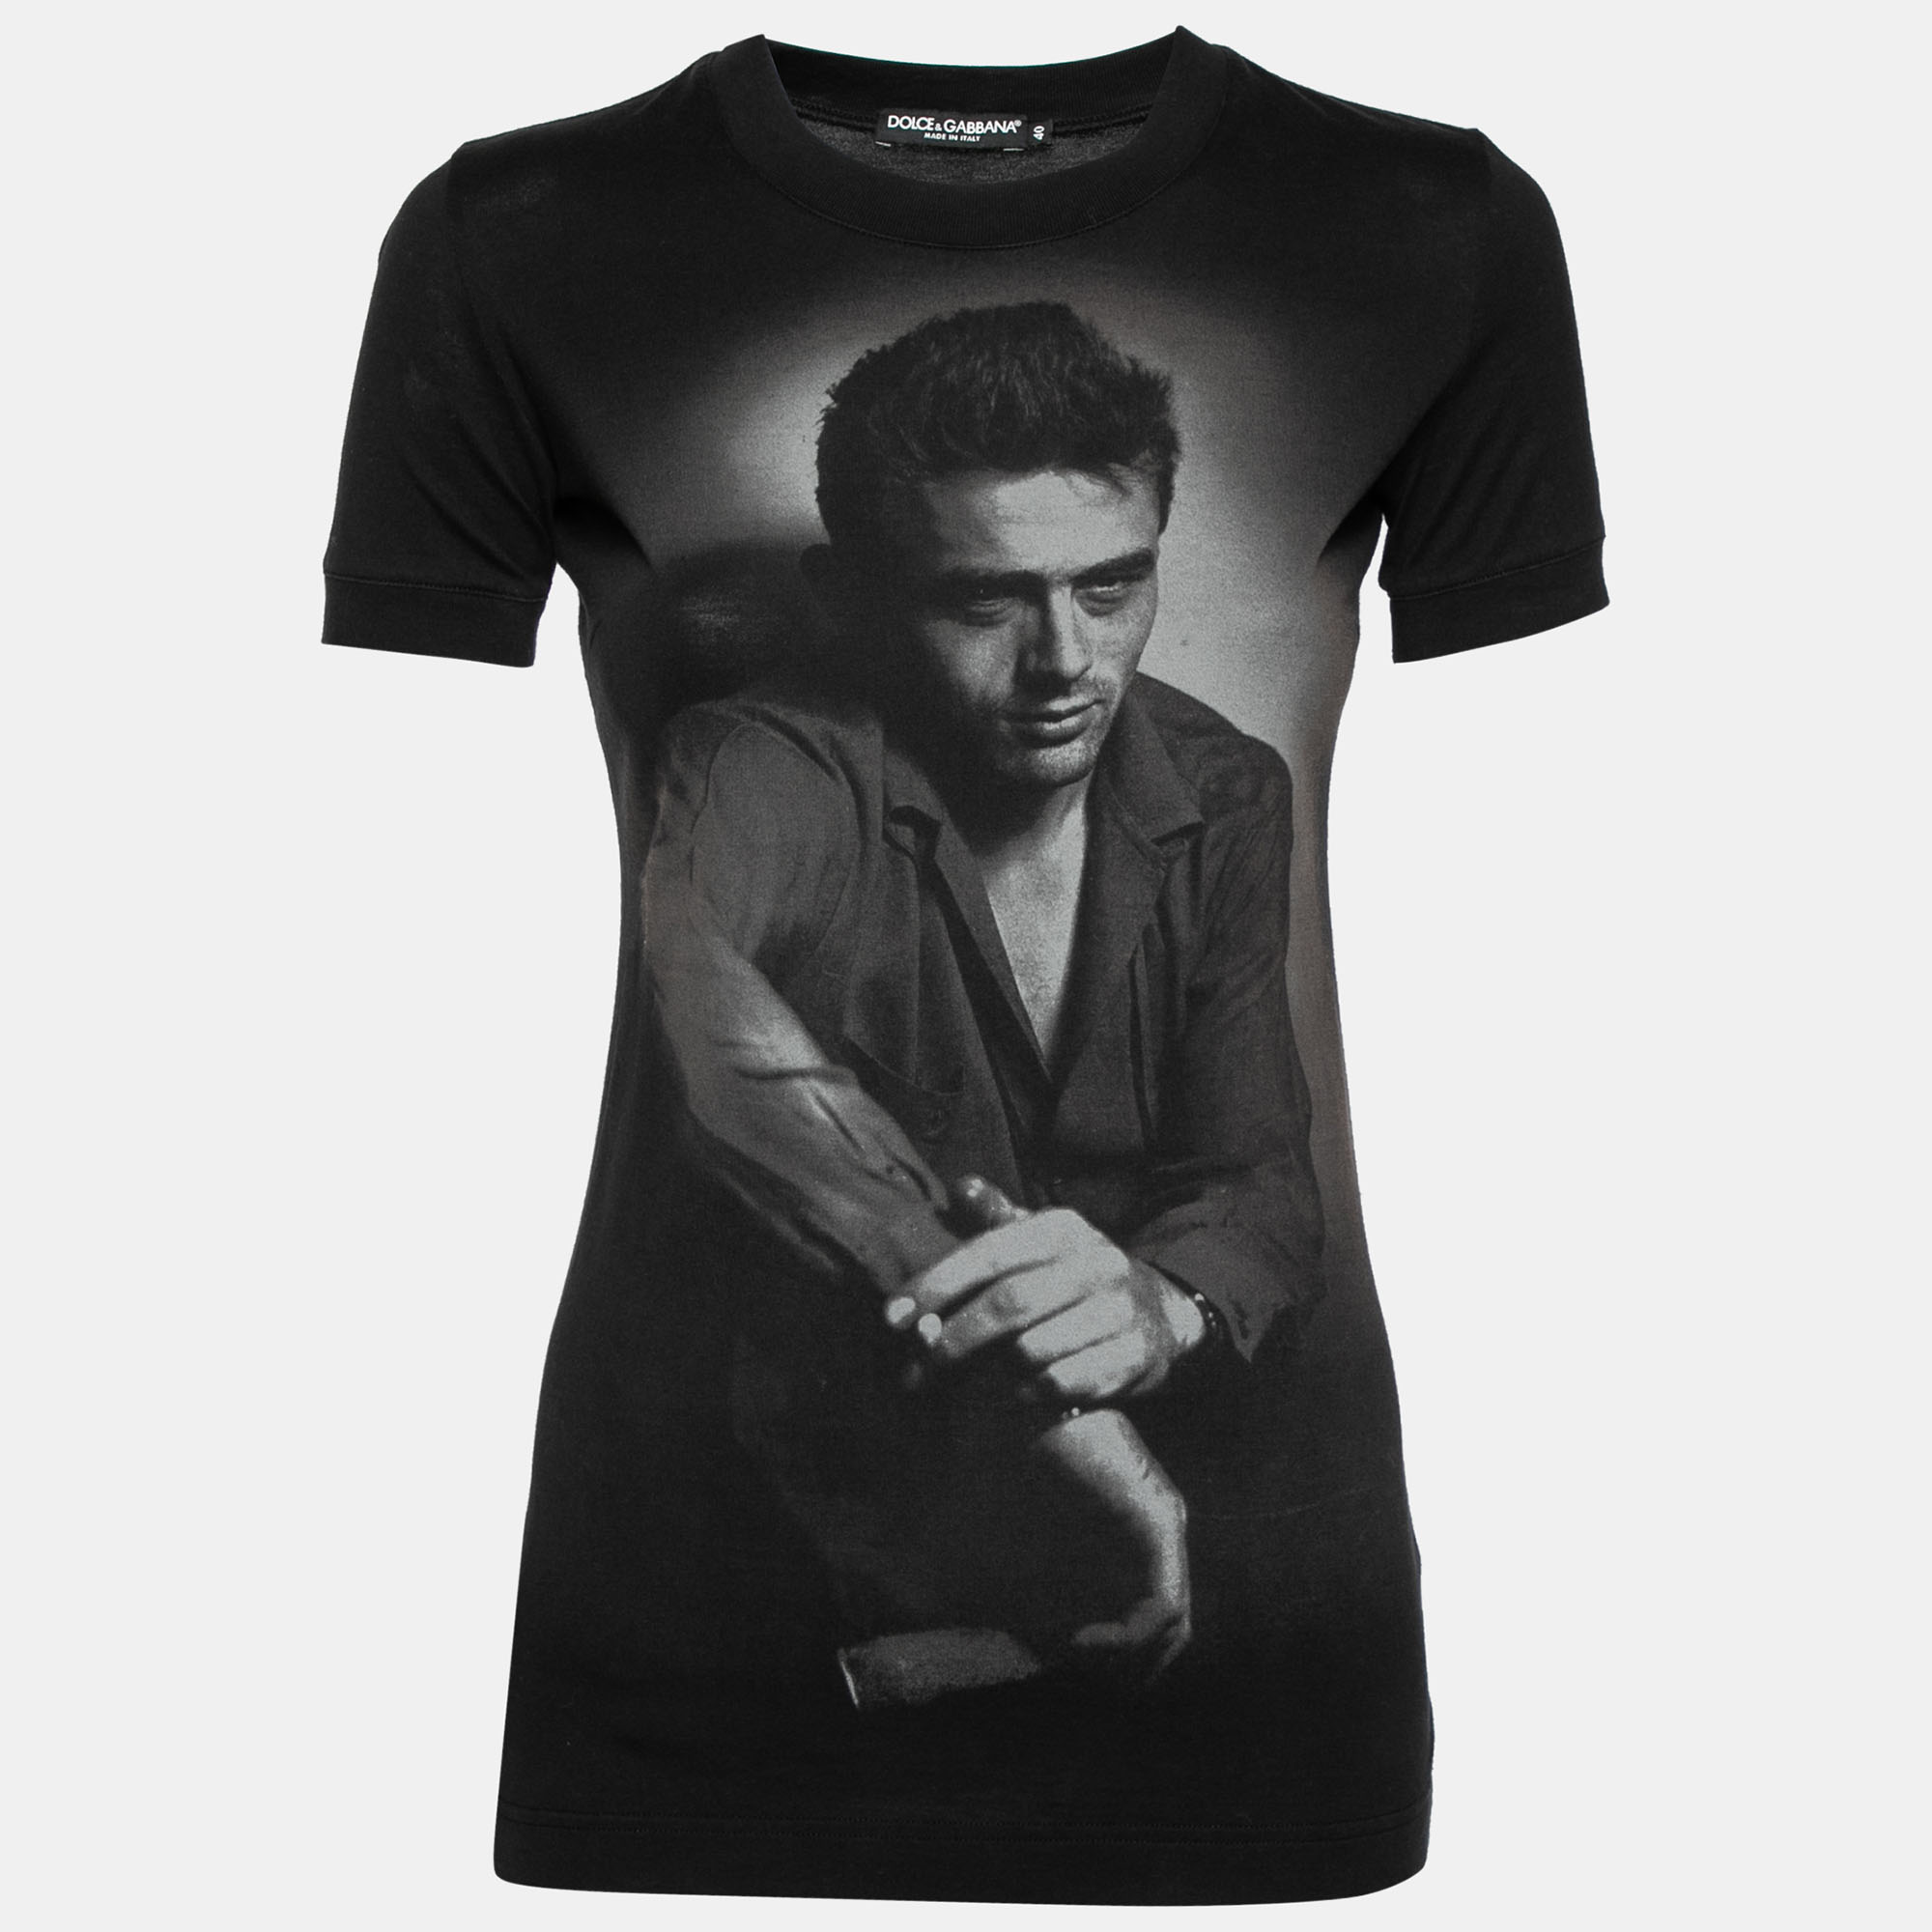 

Dolce & Gabbana Black Cotton James Dean Printed T-Shirt S